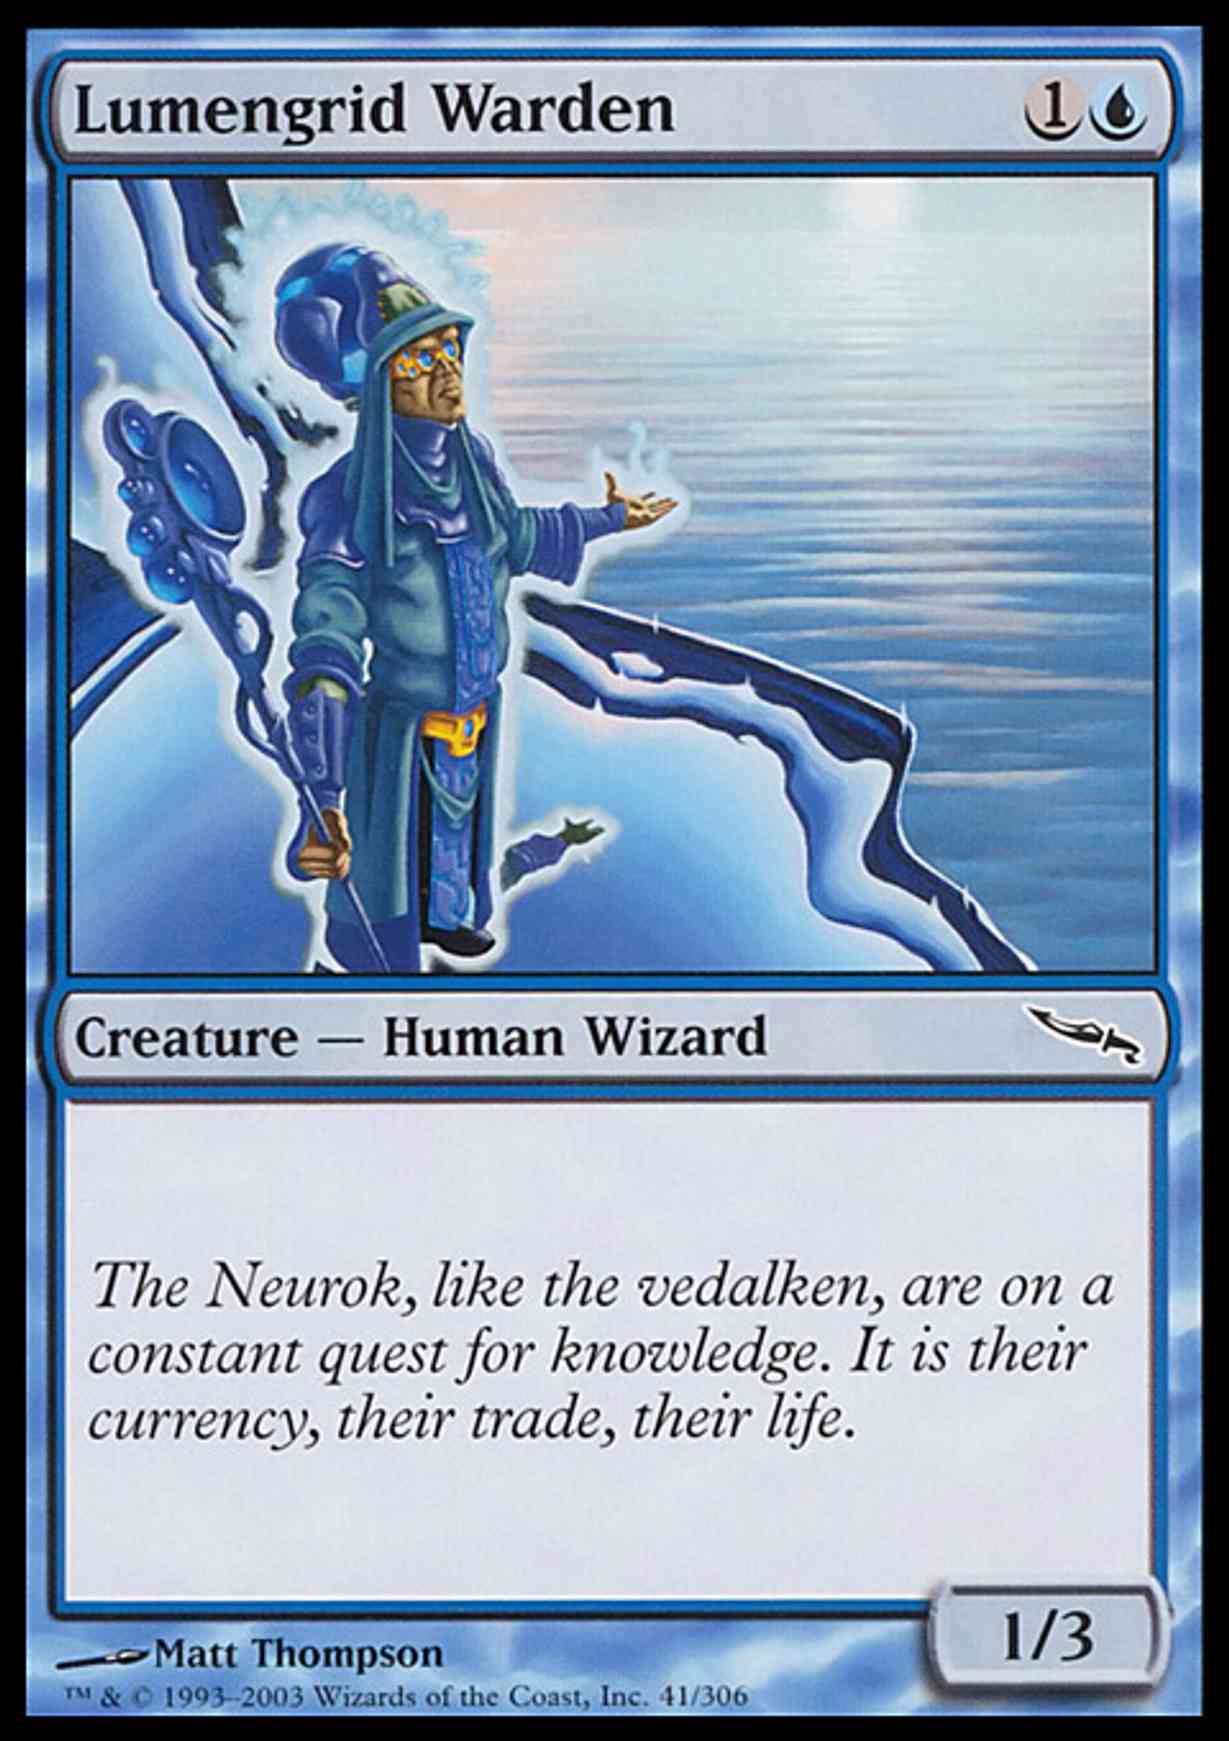 Lumengrid Warden magic card front